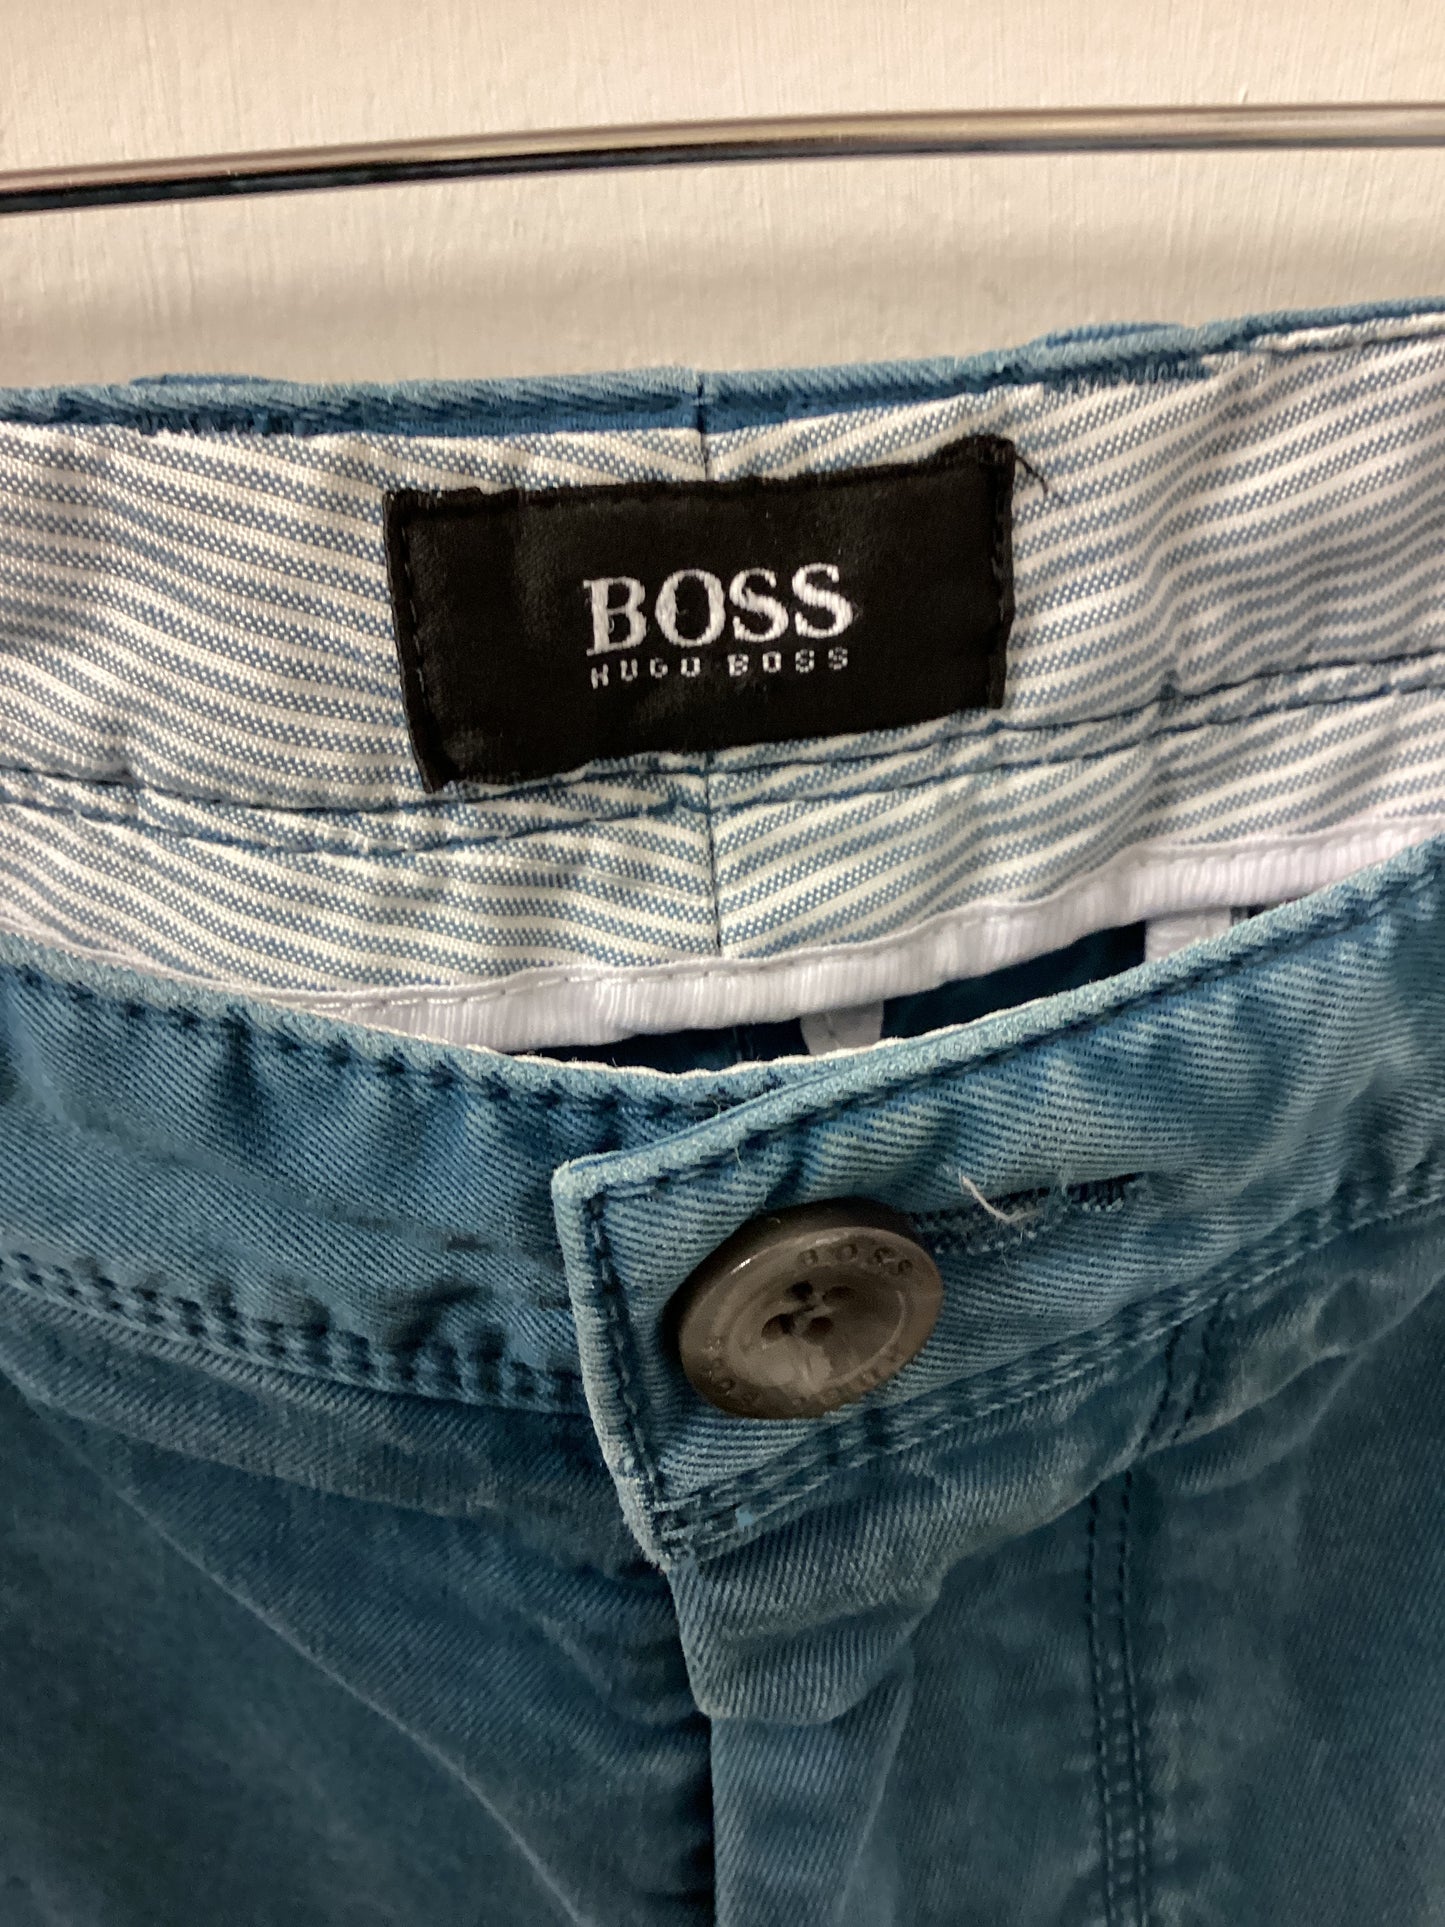 Hugo Boss Men’s Blue Jeans Stretch W36 L38